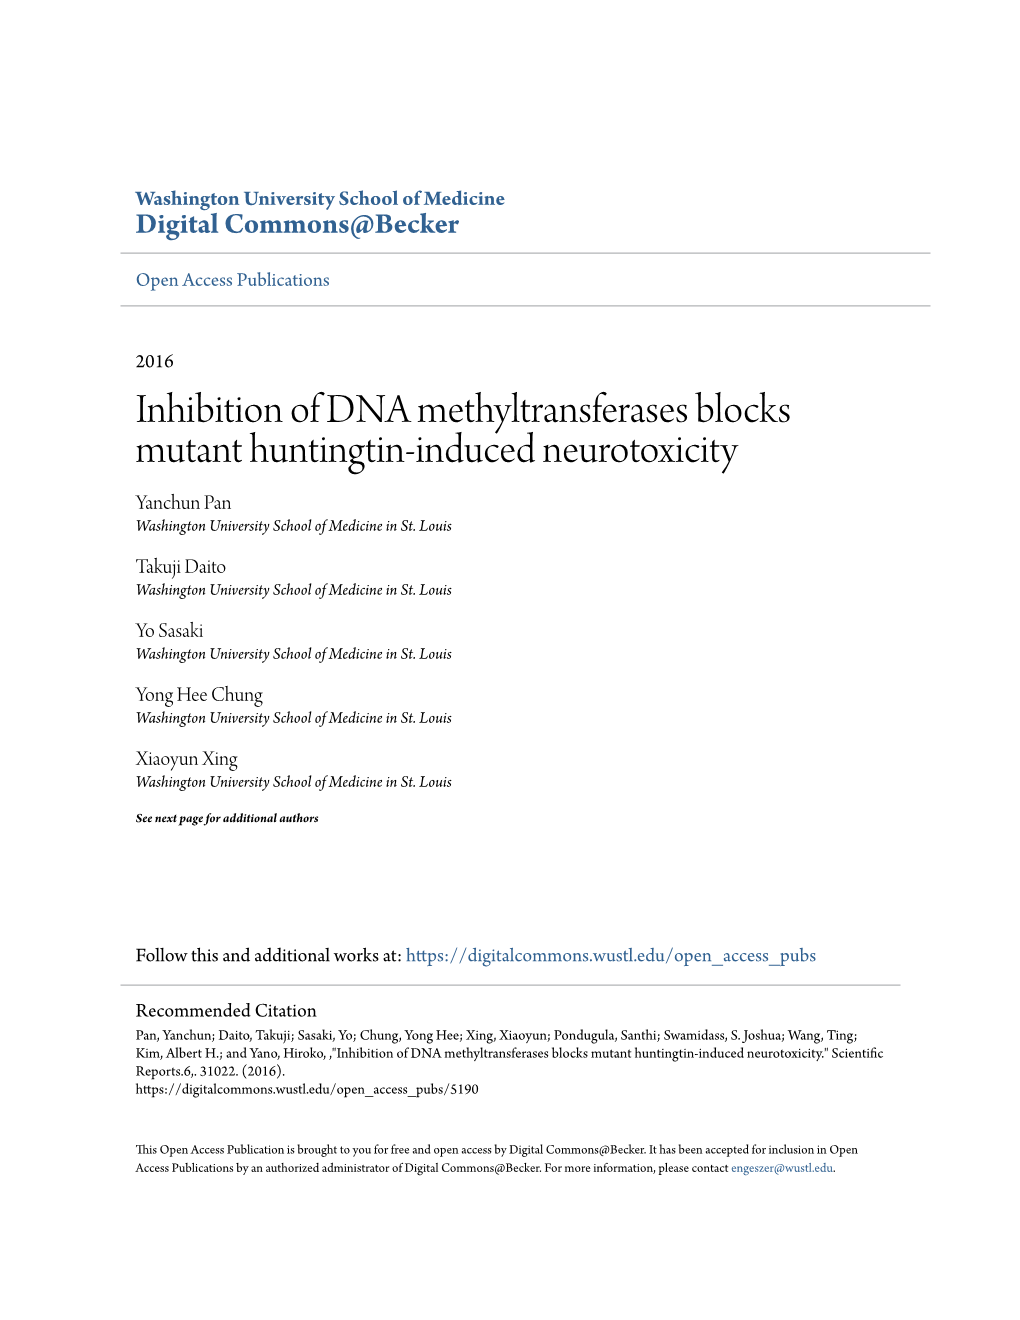 Inhibition of DNA Methyltransferases Blocks Mutant Huntingtin-Induced Neurotoxicity Yanchun Pan Washington University School of Medicine in St